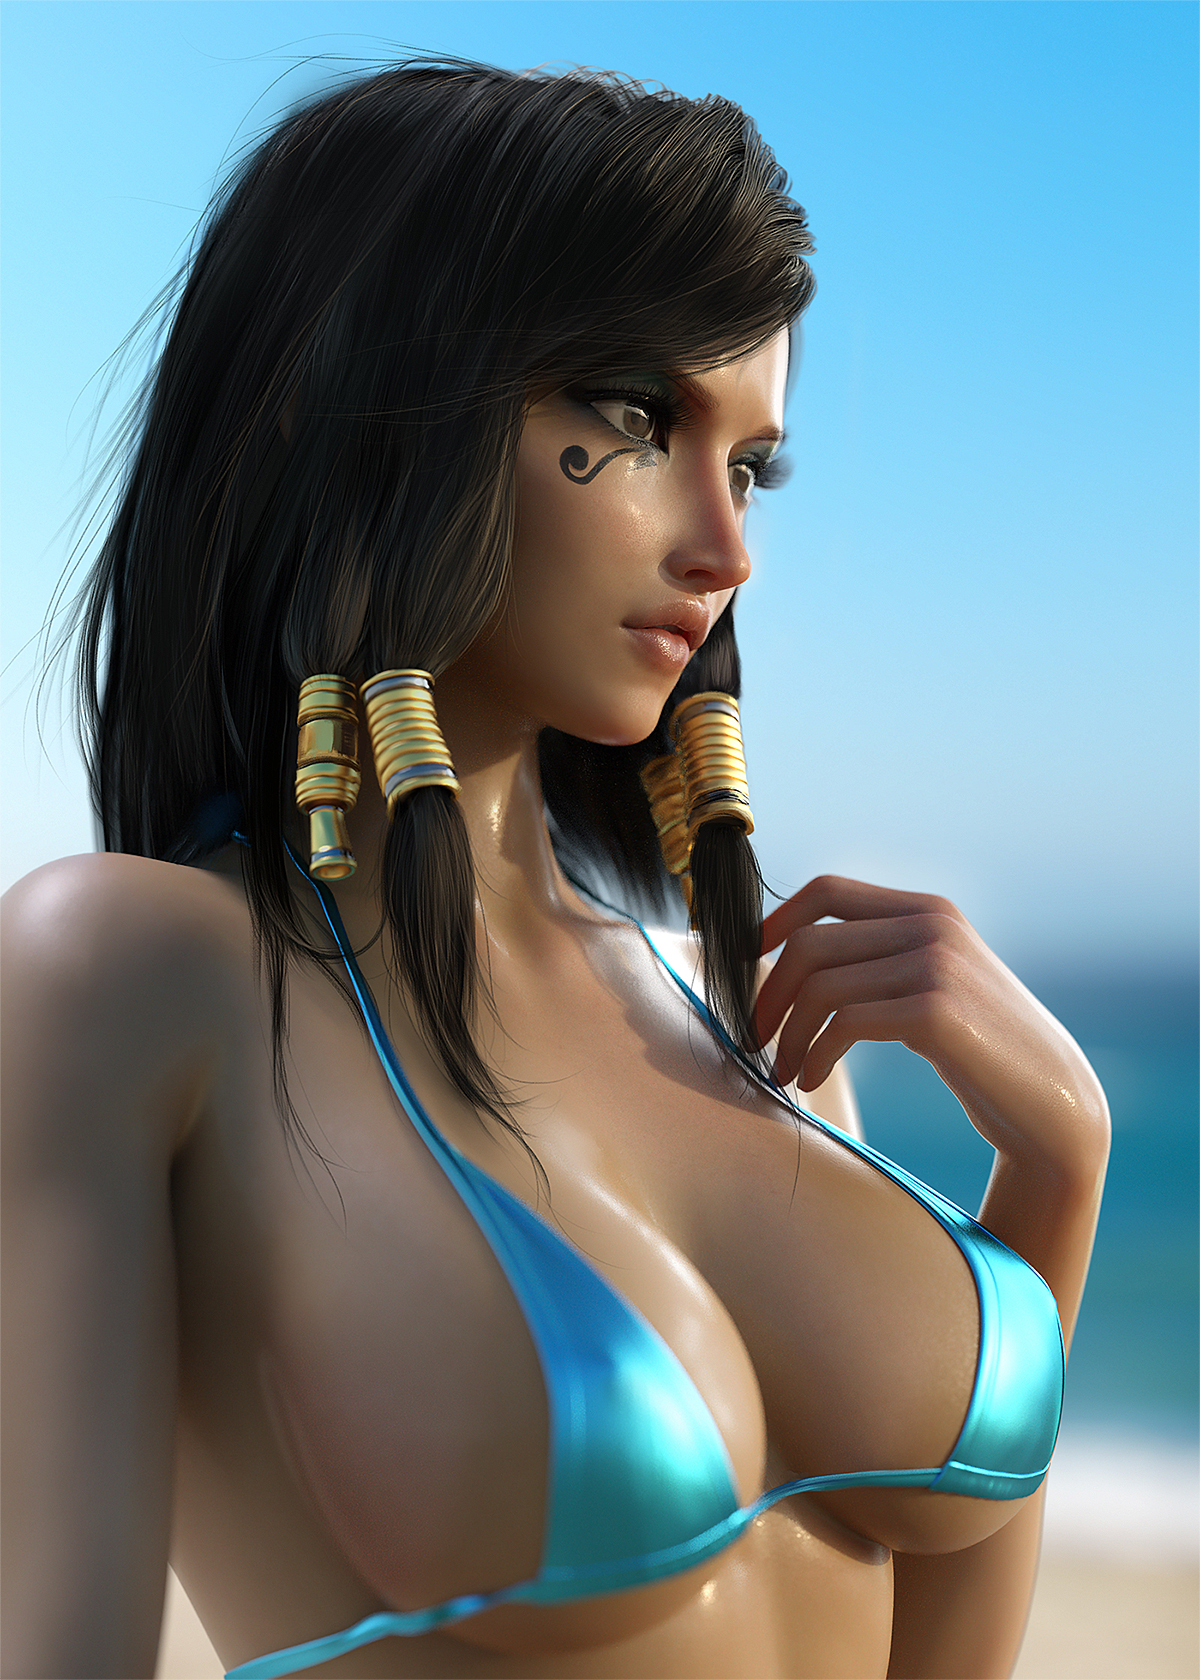 General 1200x1680 Overwatch Pharah (Overwatch) women dark hair swimwear bikini tattoo Sevenbees boobs big boobs fantasy girl CGI